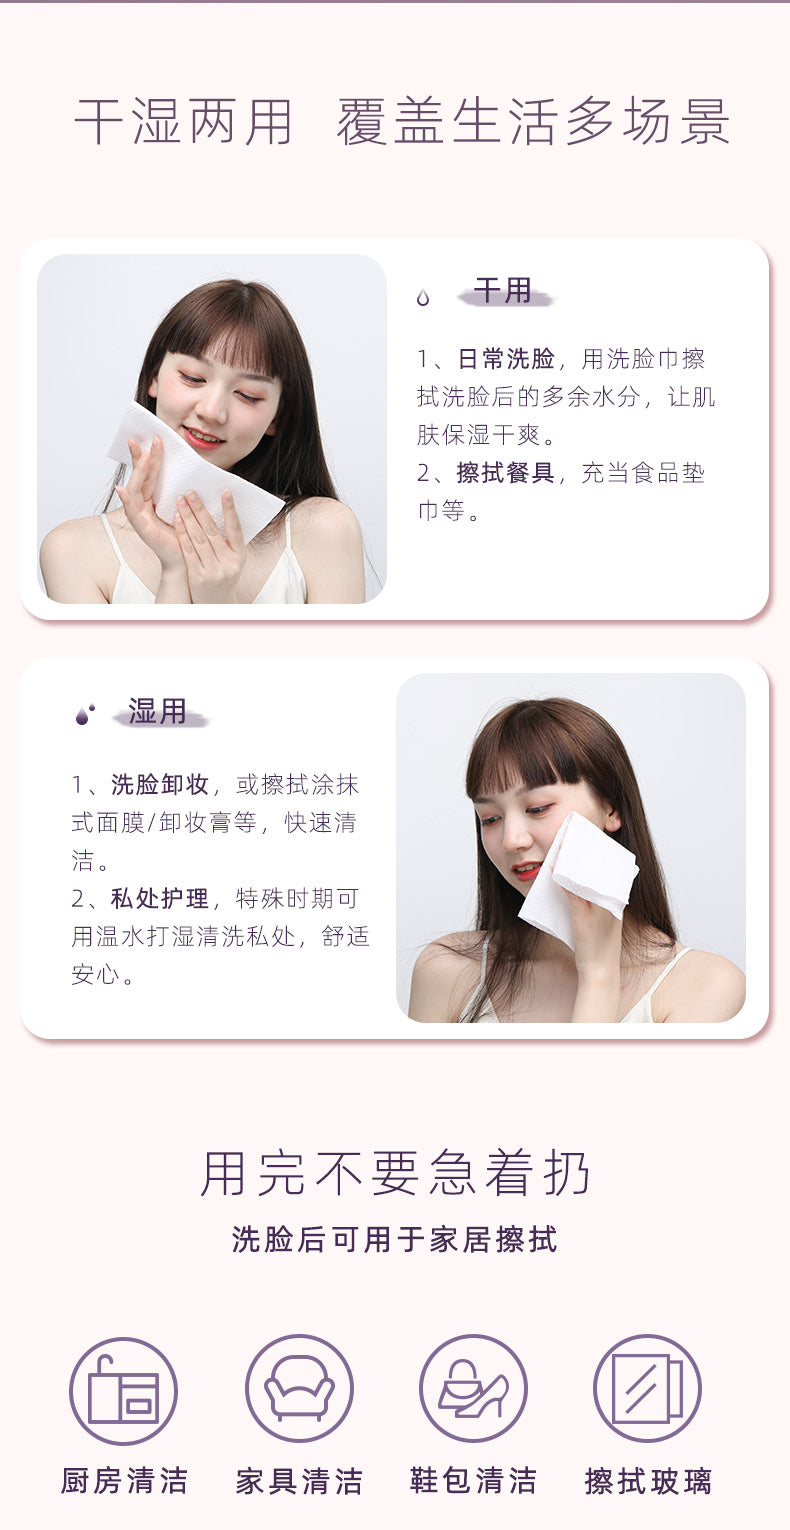 EVERBAB Disposable Facial Towel 艾蓓拉团团棉花洁面巾 80sheets/60sheets